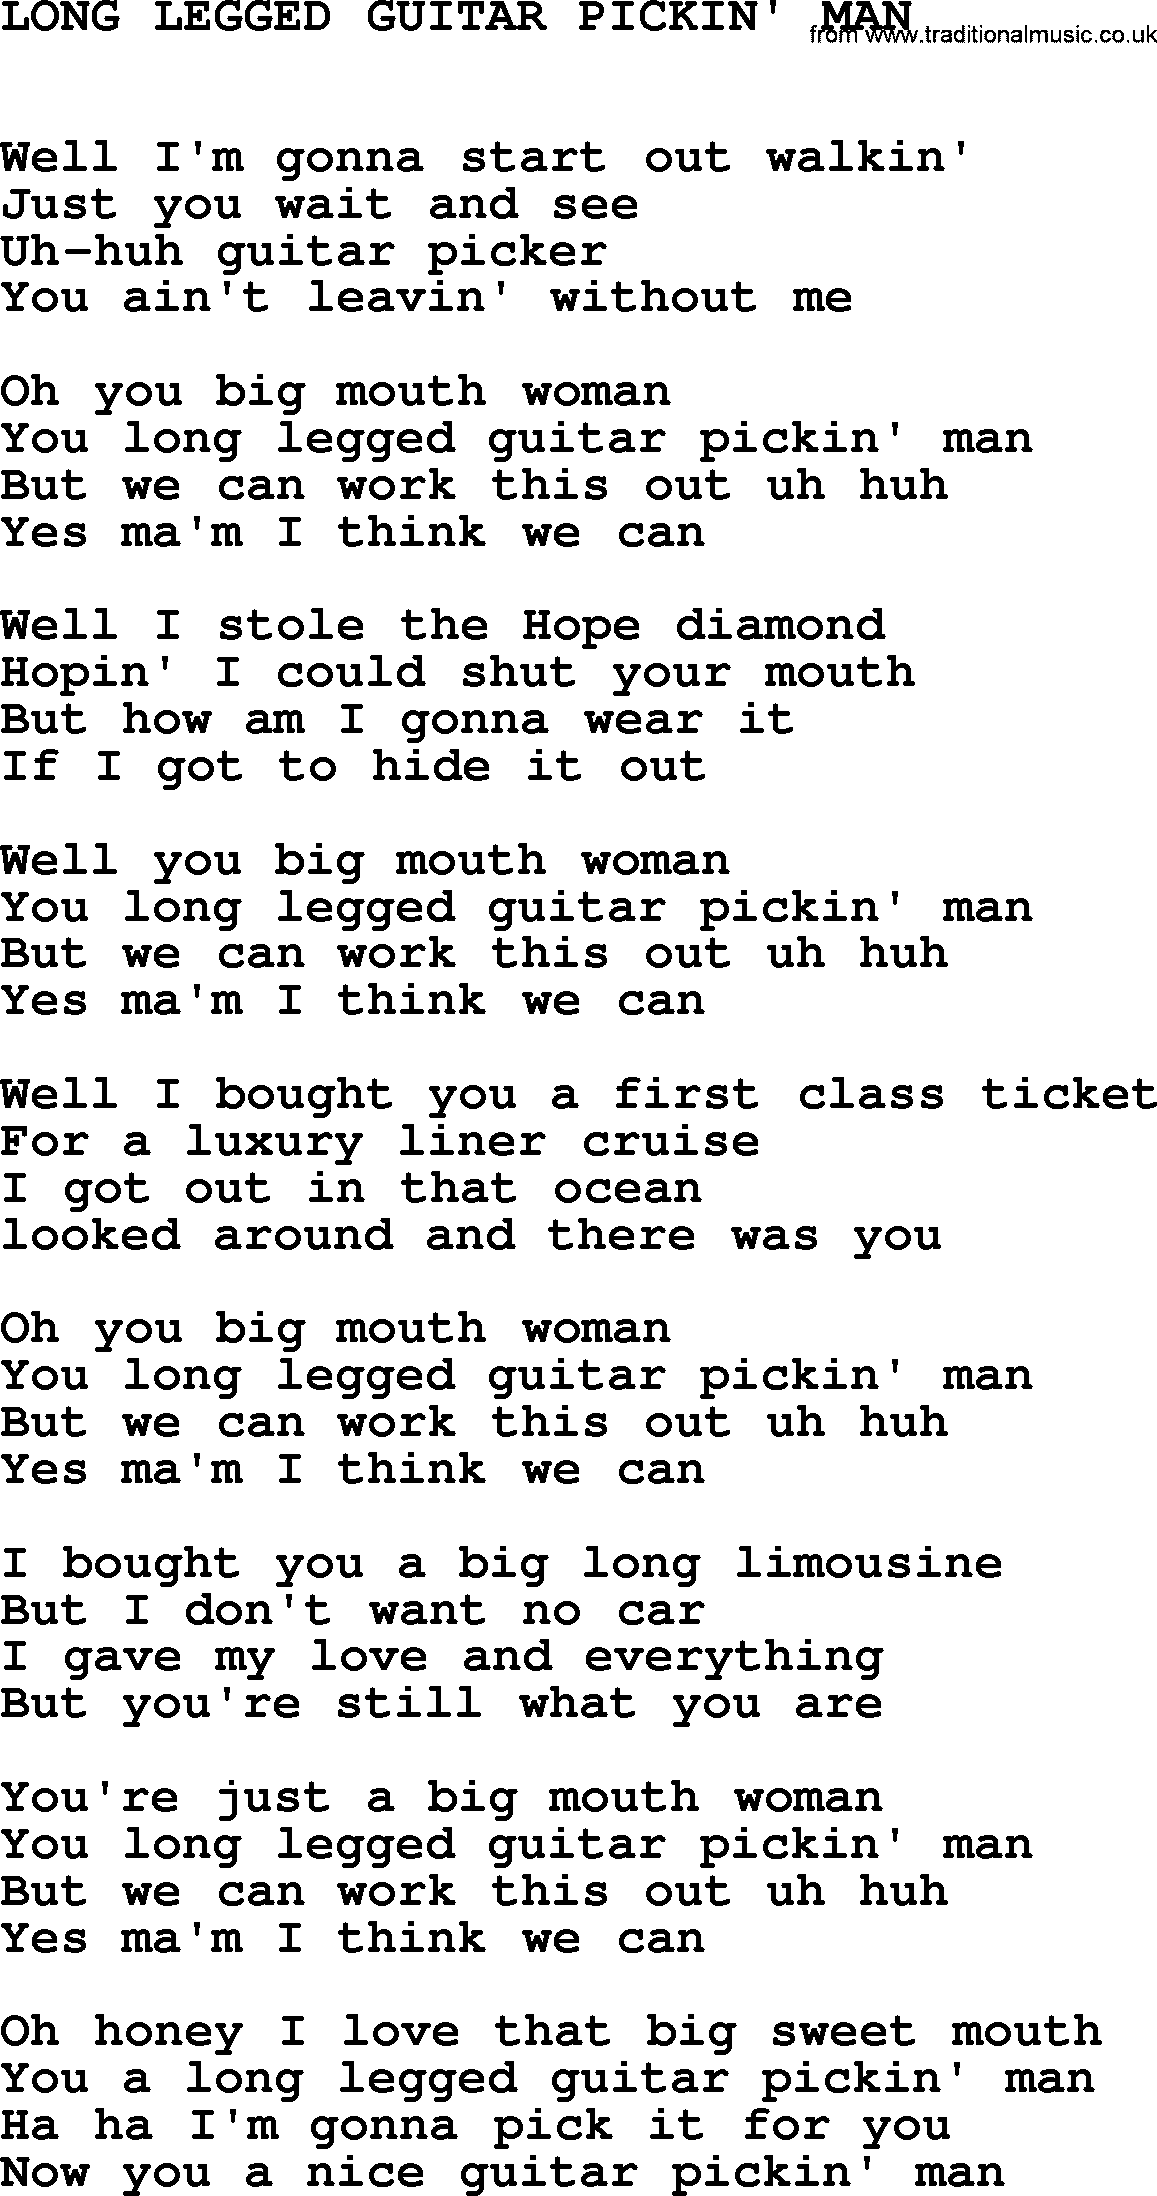 Johnny Cash song Long Legged Guitar Pickin' Man.txt lyrics